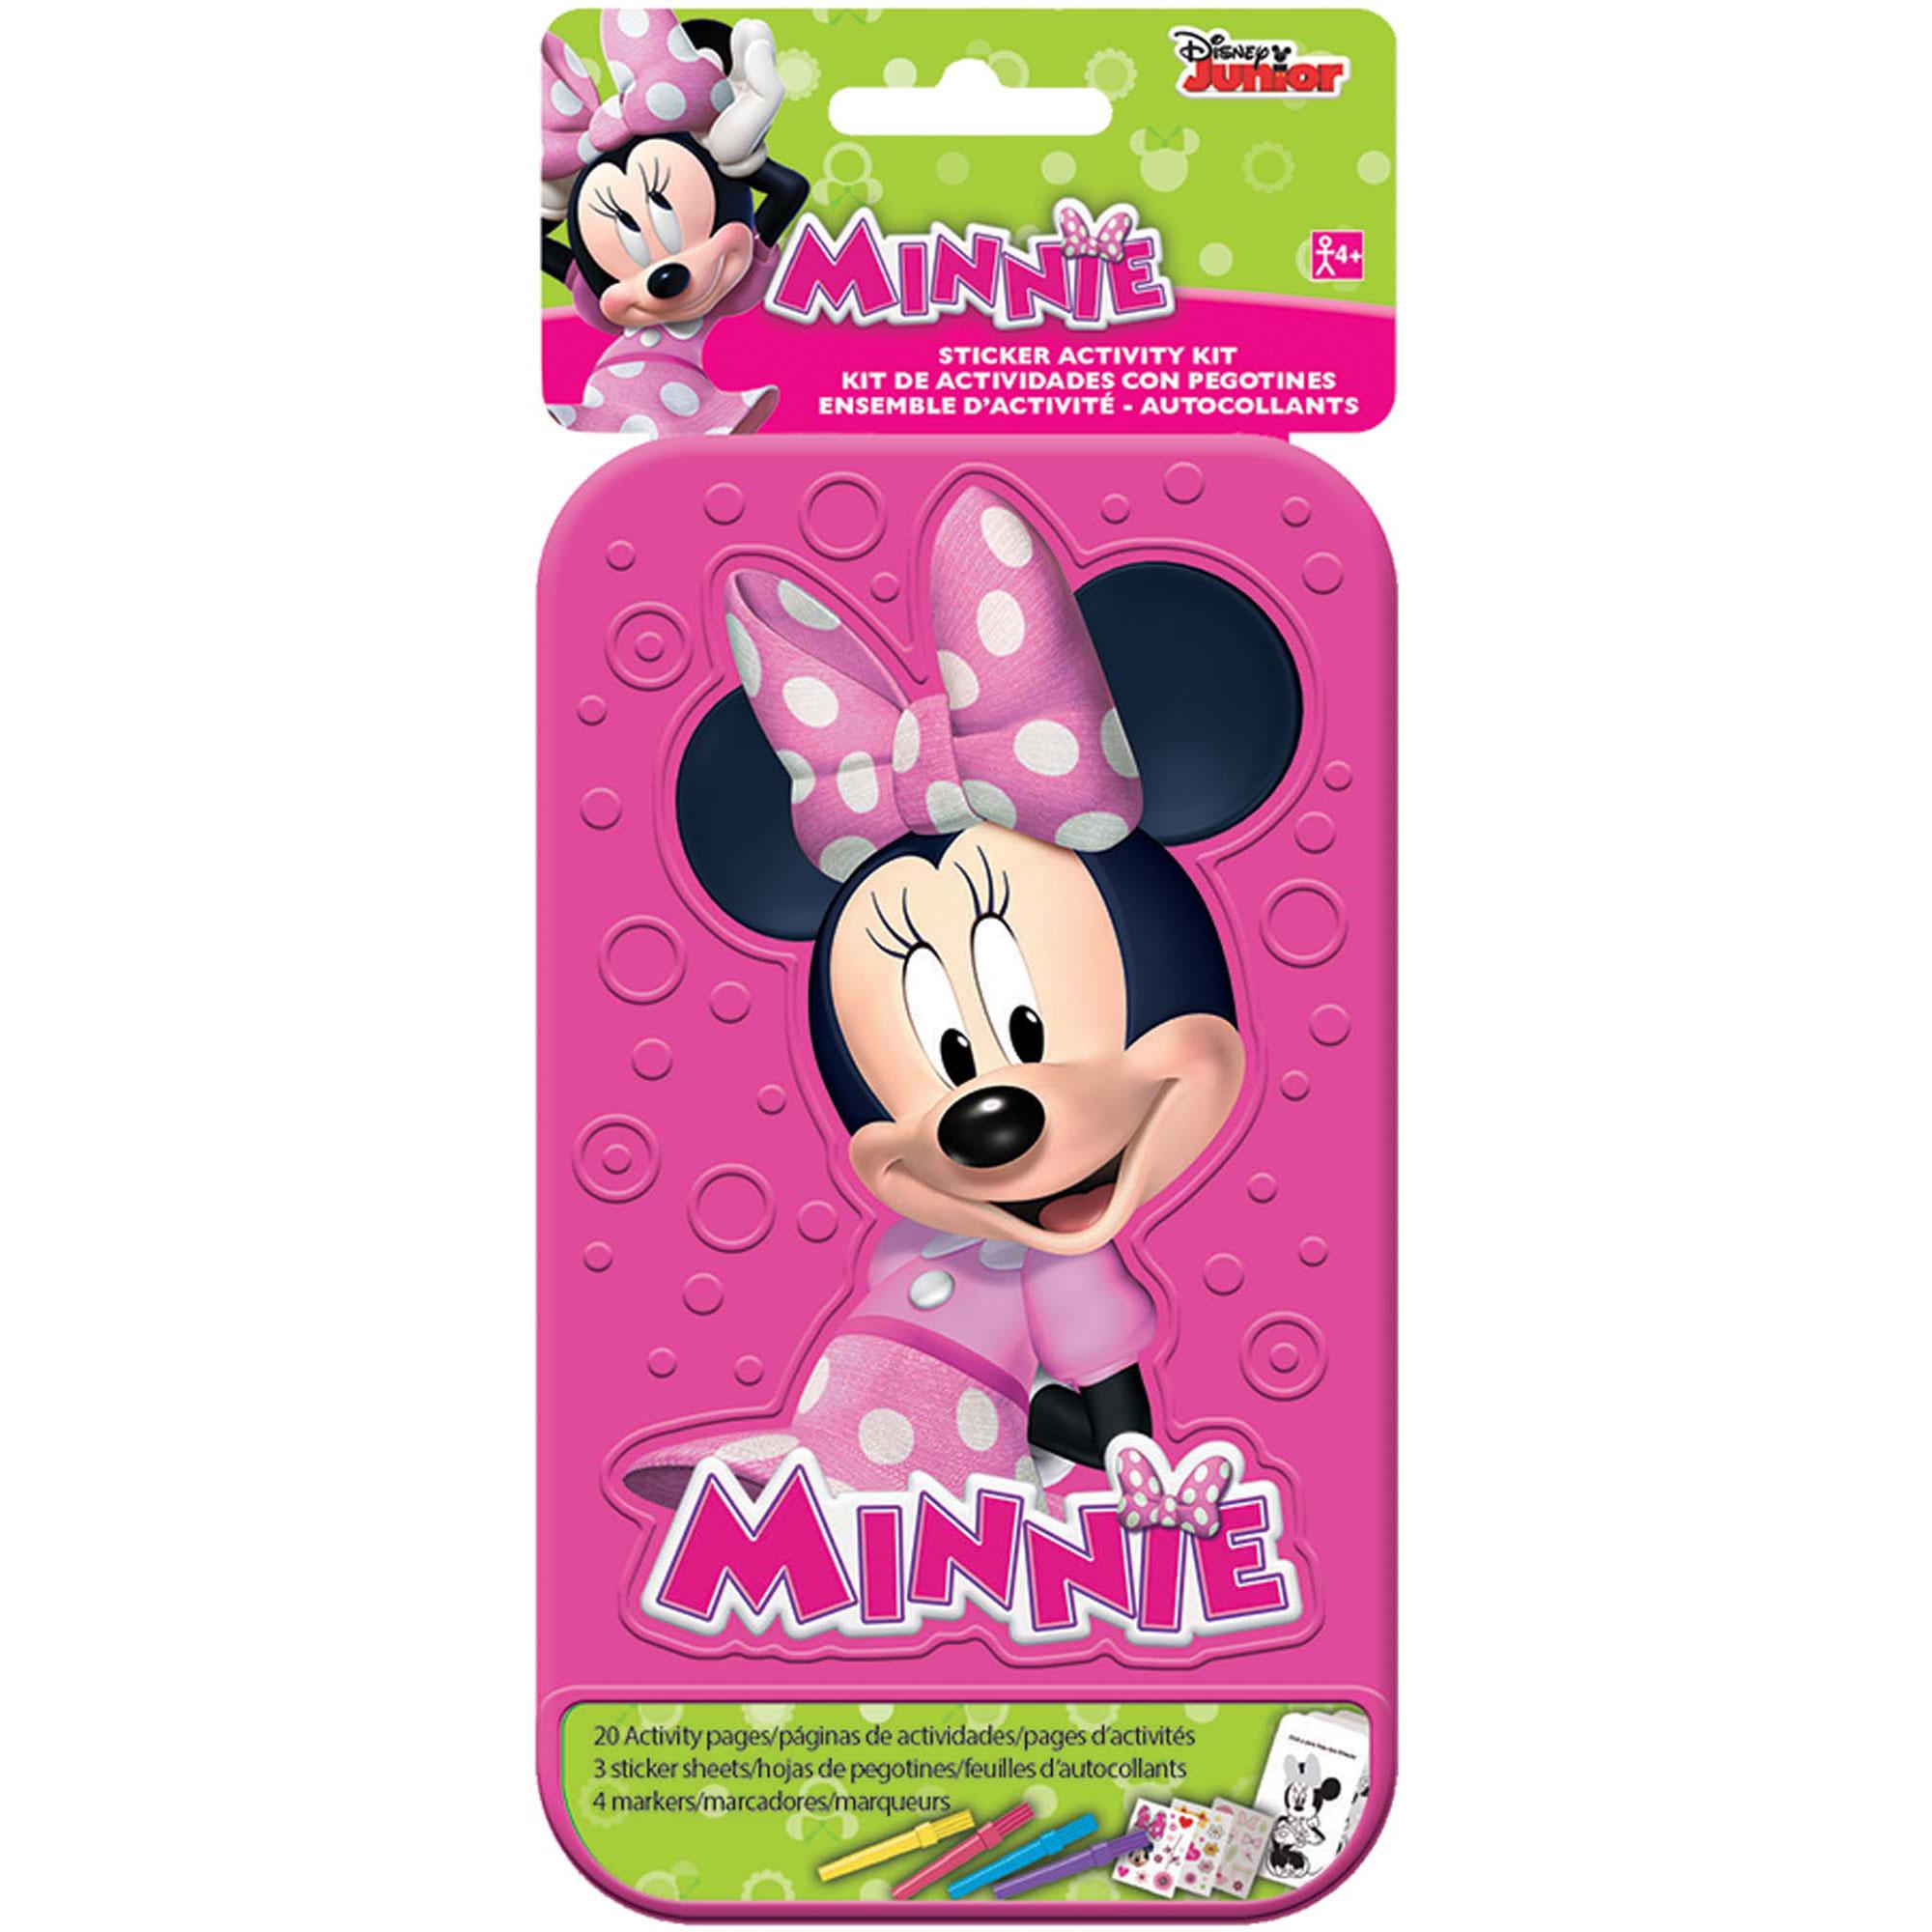 Minnie Sticker Activity Kit Party Favors - Party Centre